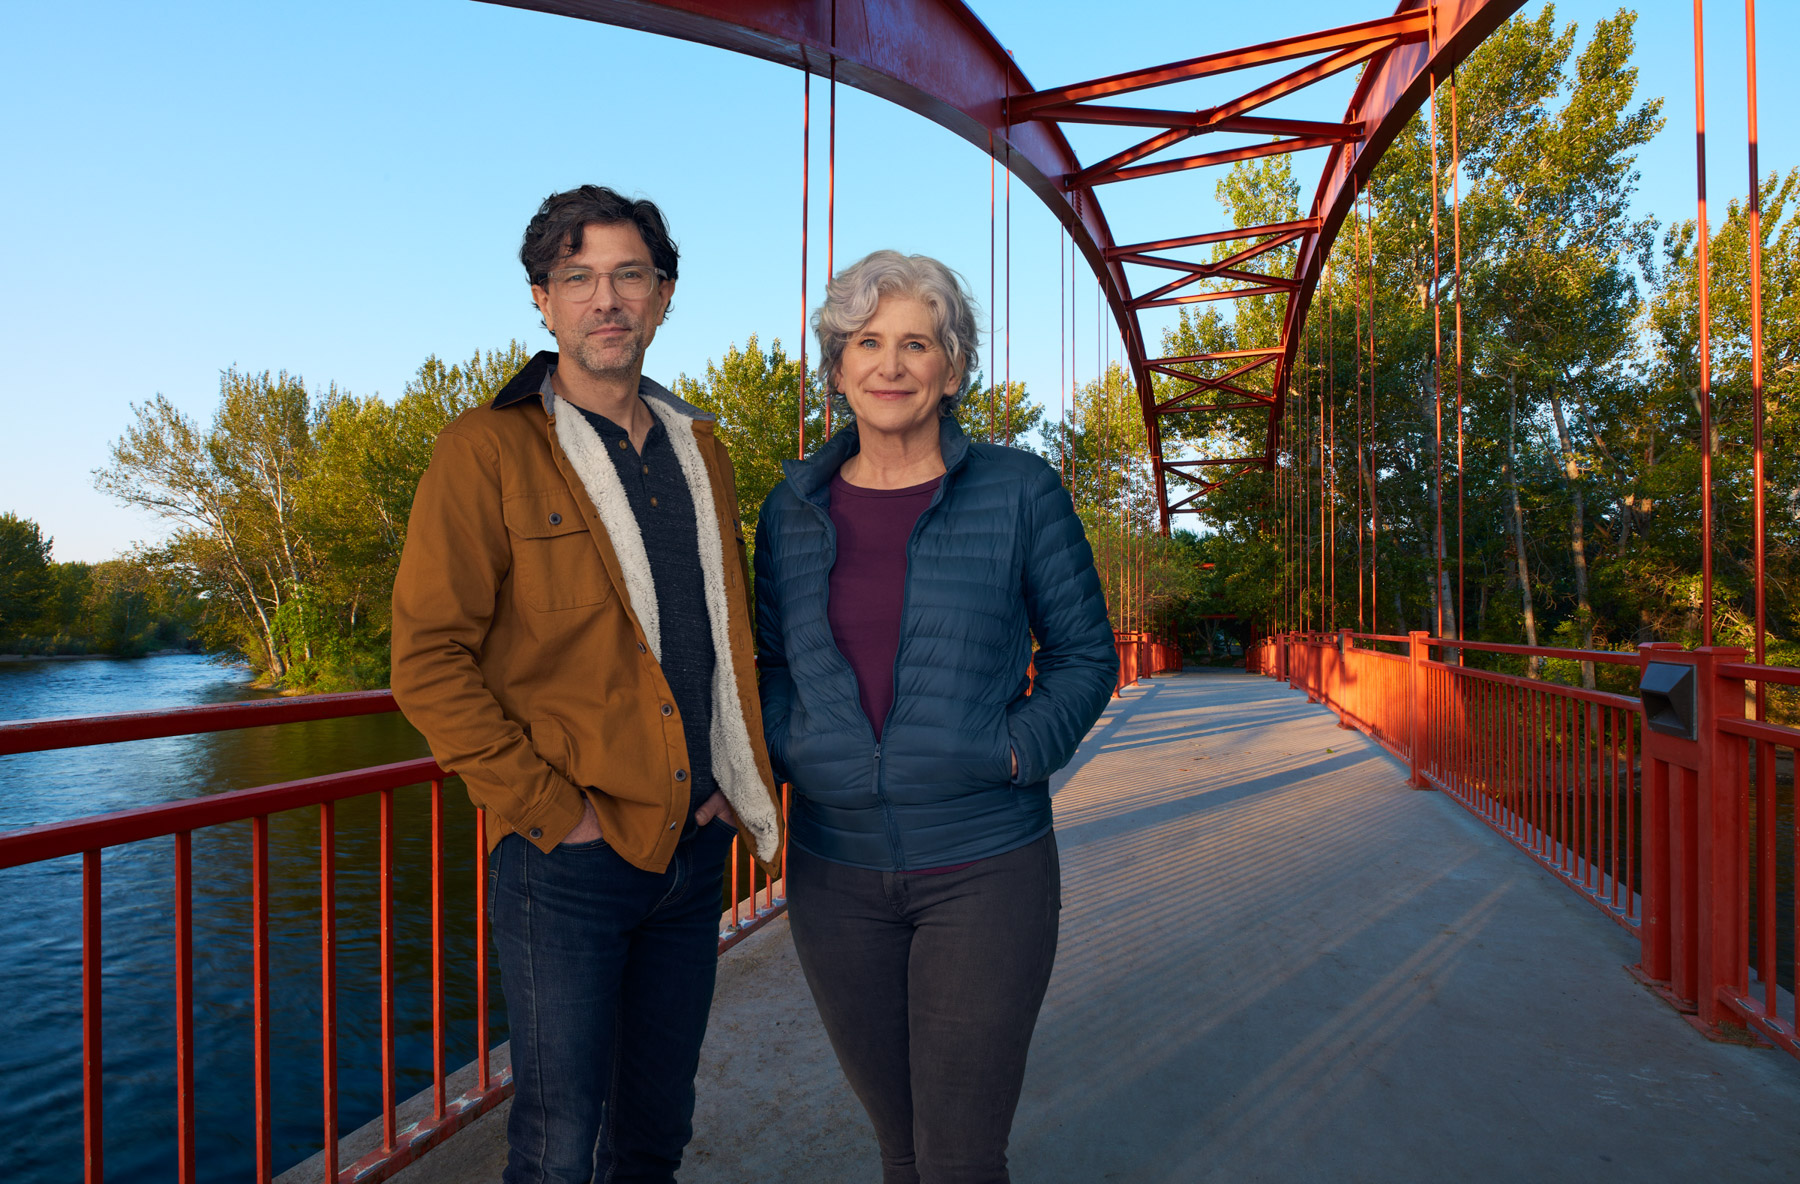 Couple poses at red pedestrian bridge in Boise, Idaho